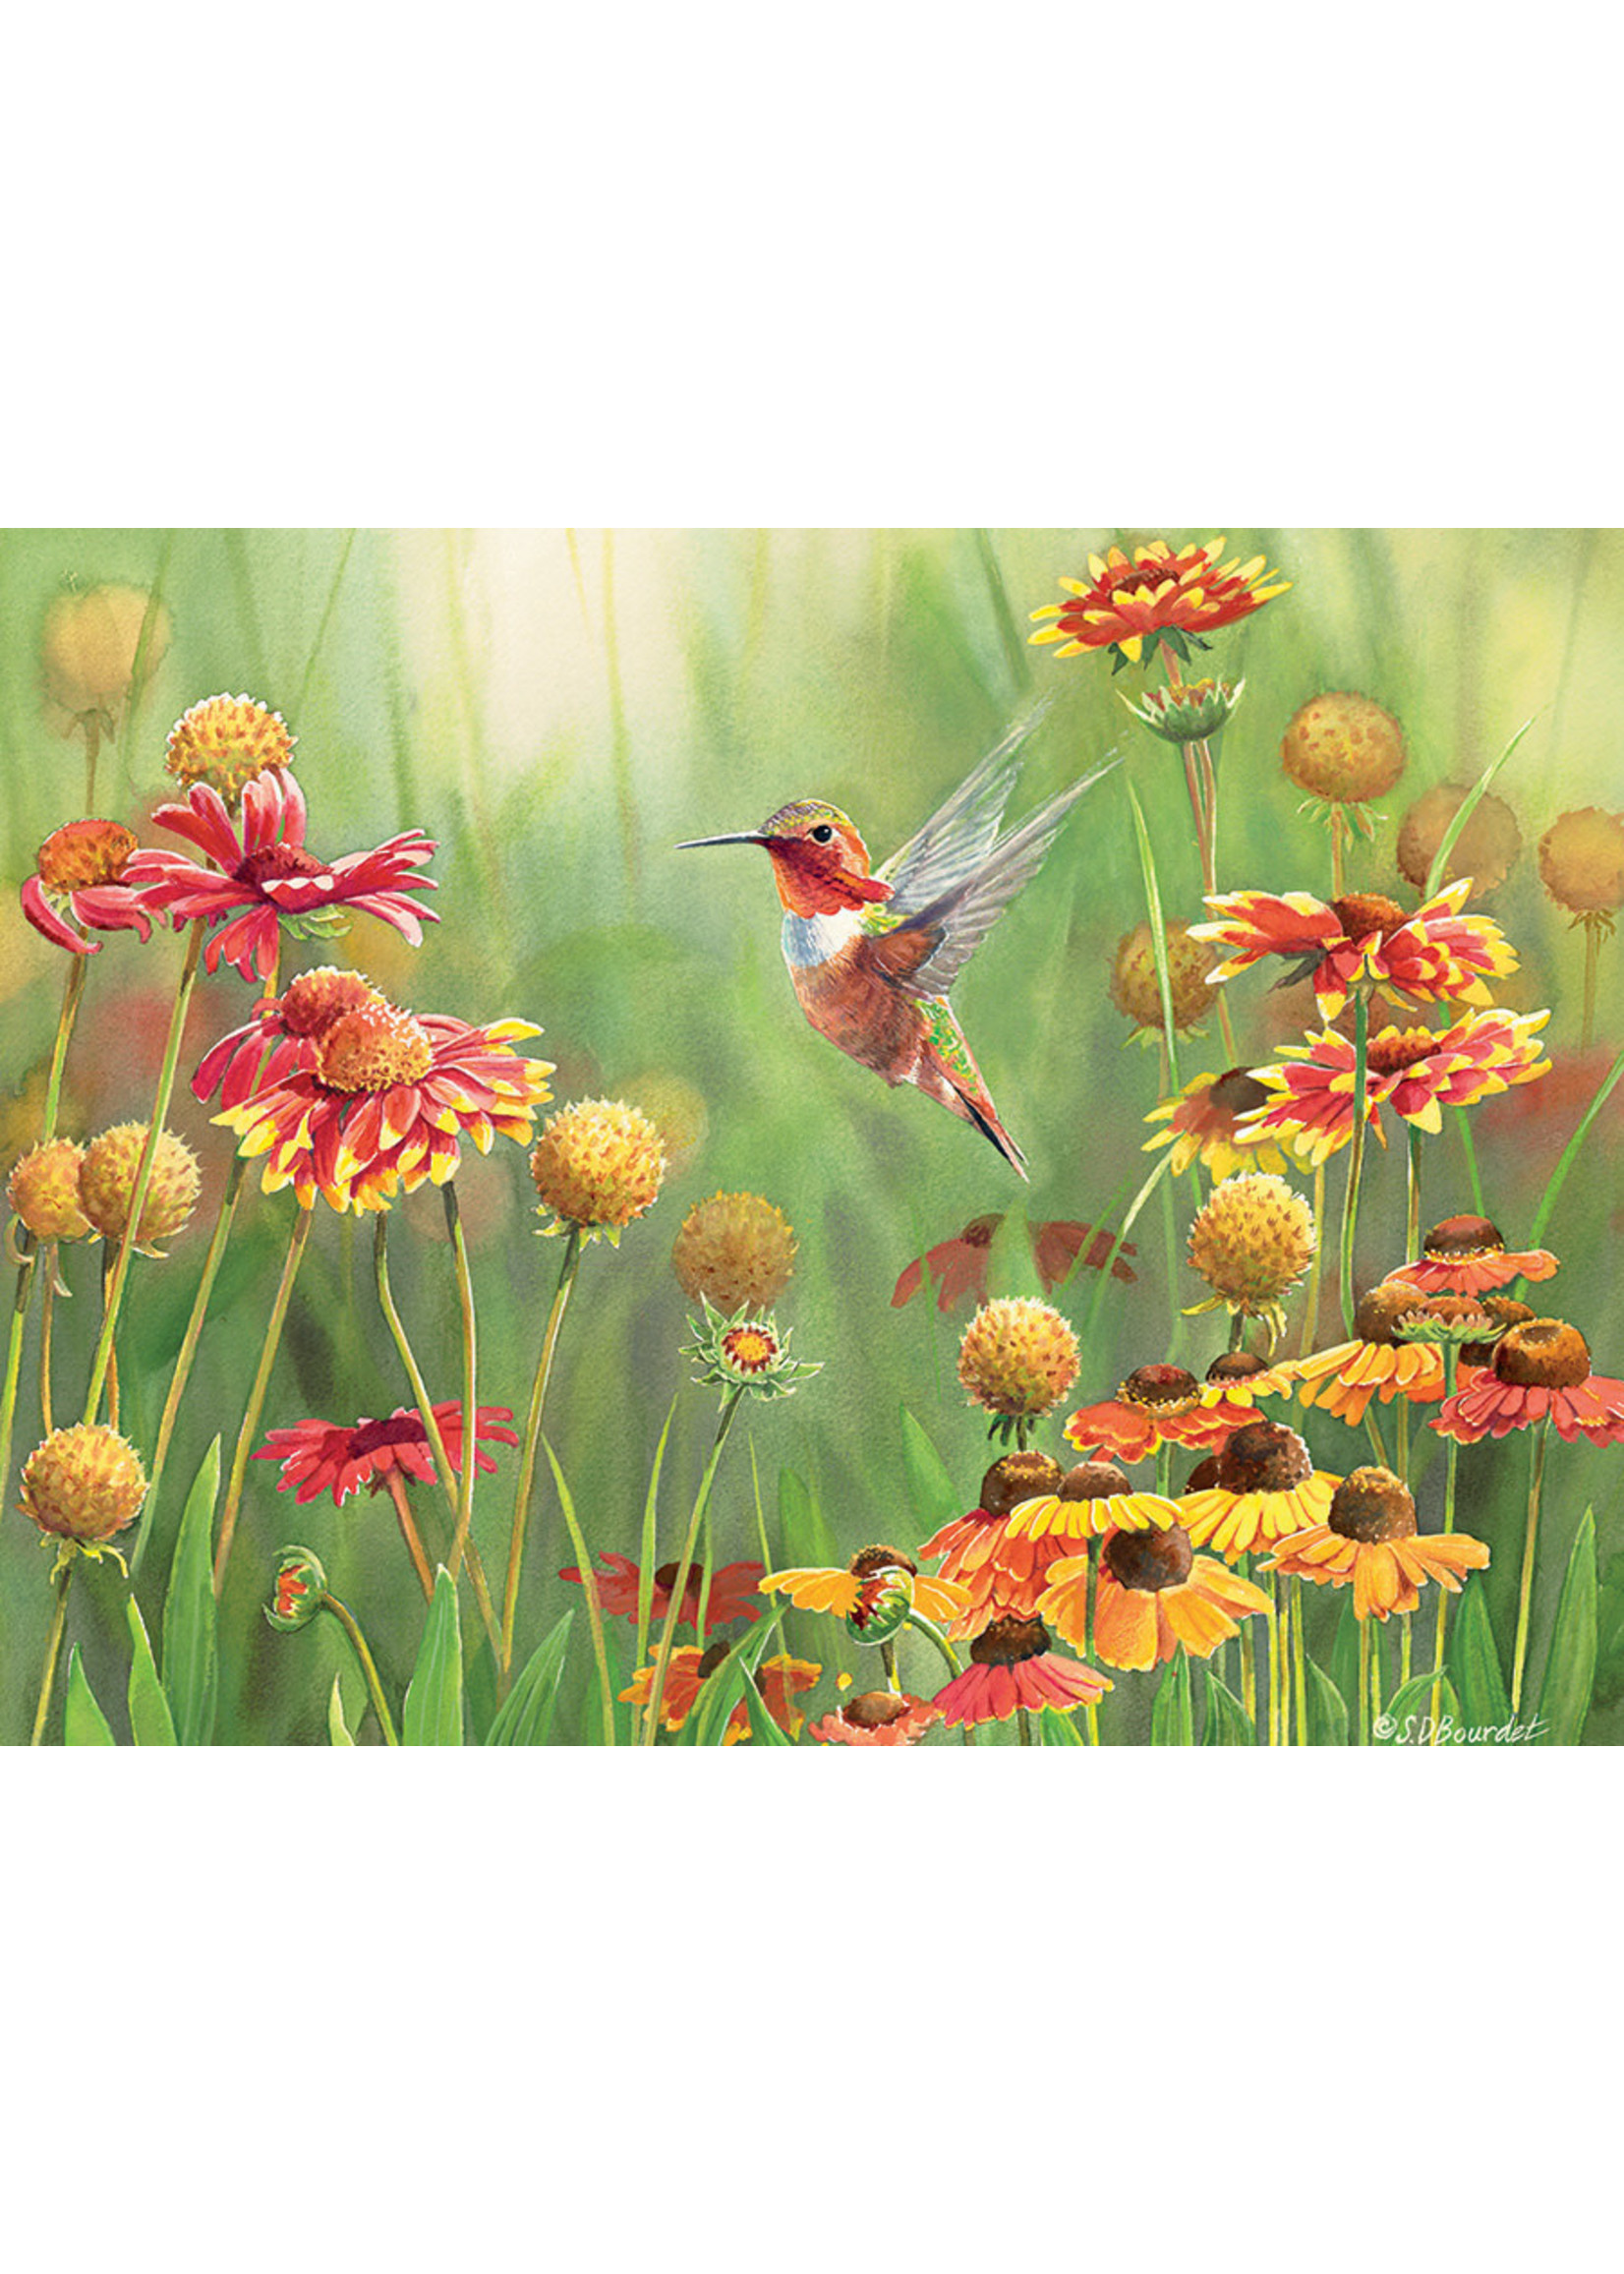 Cobble Hill Rufous Hummingbird Puzzle 500 Pieces